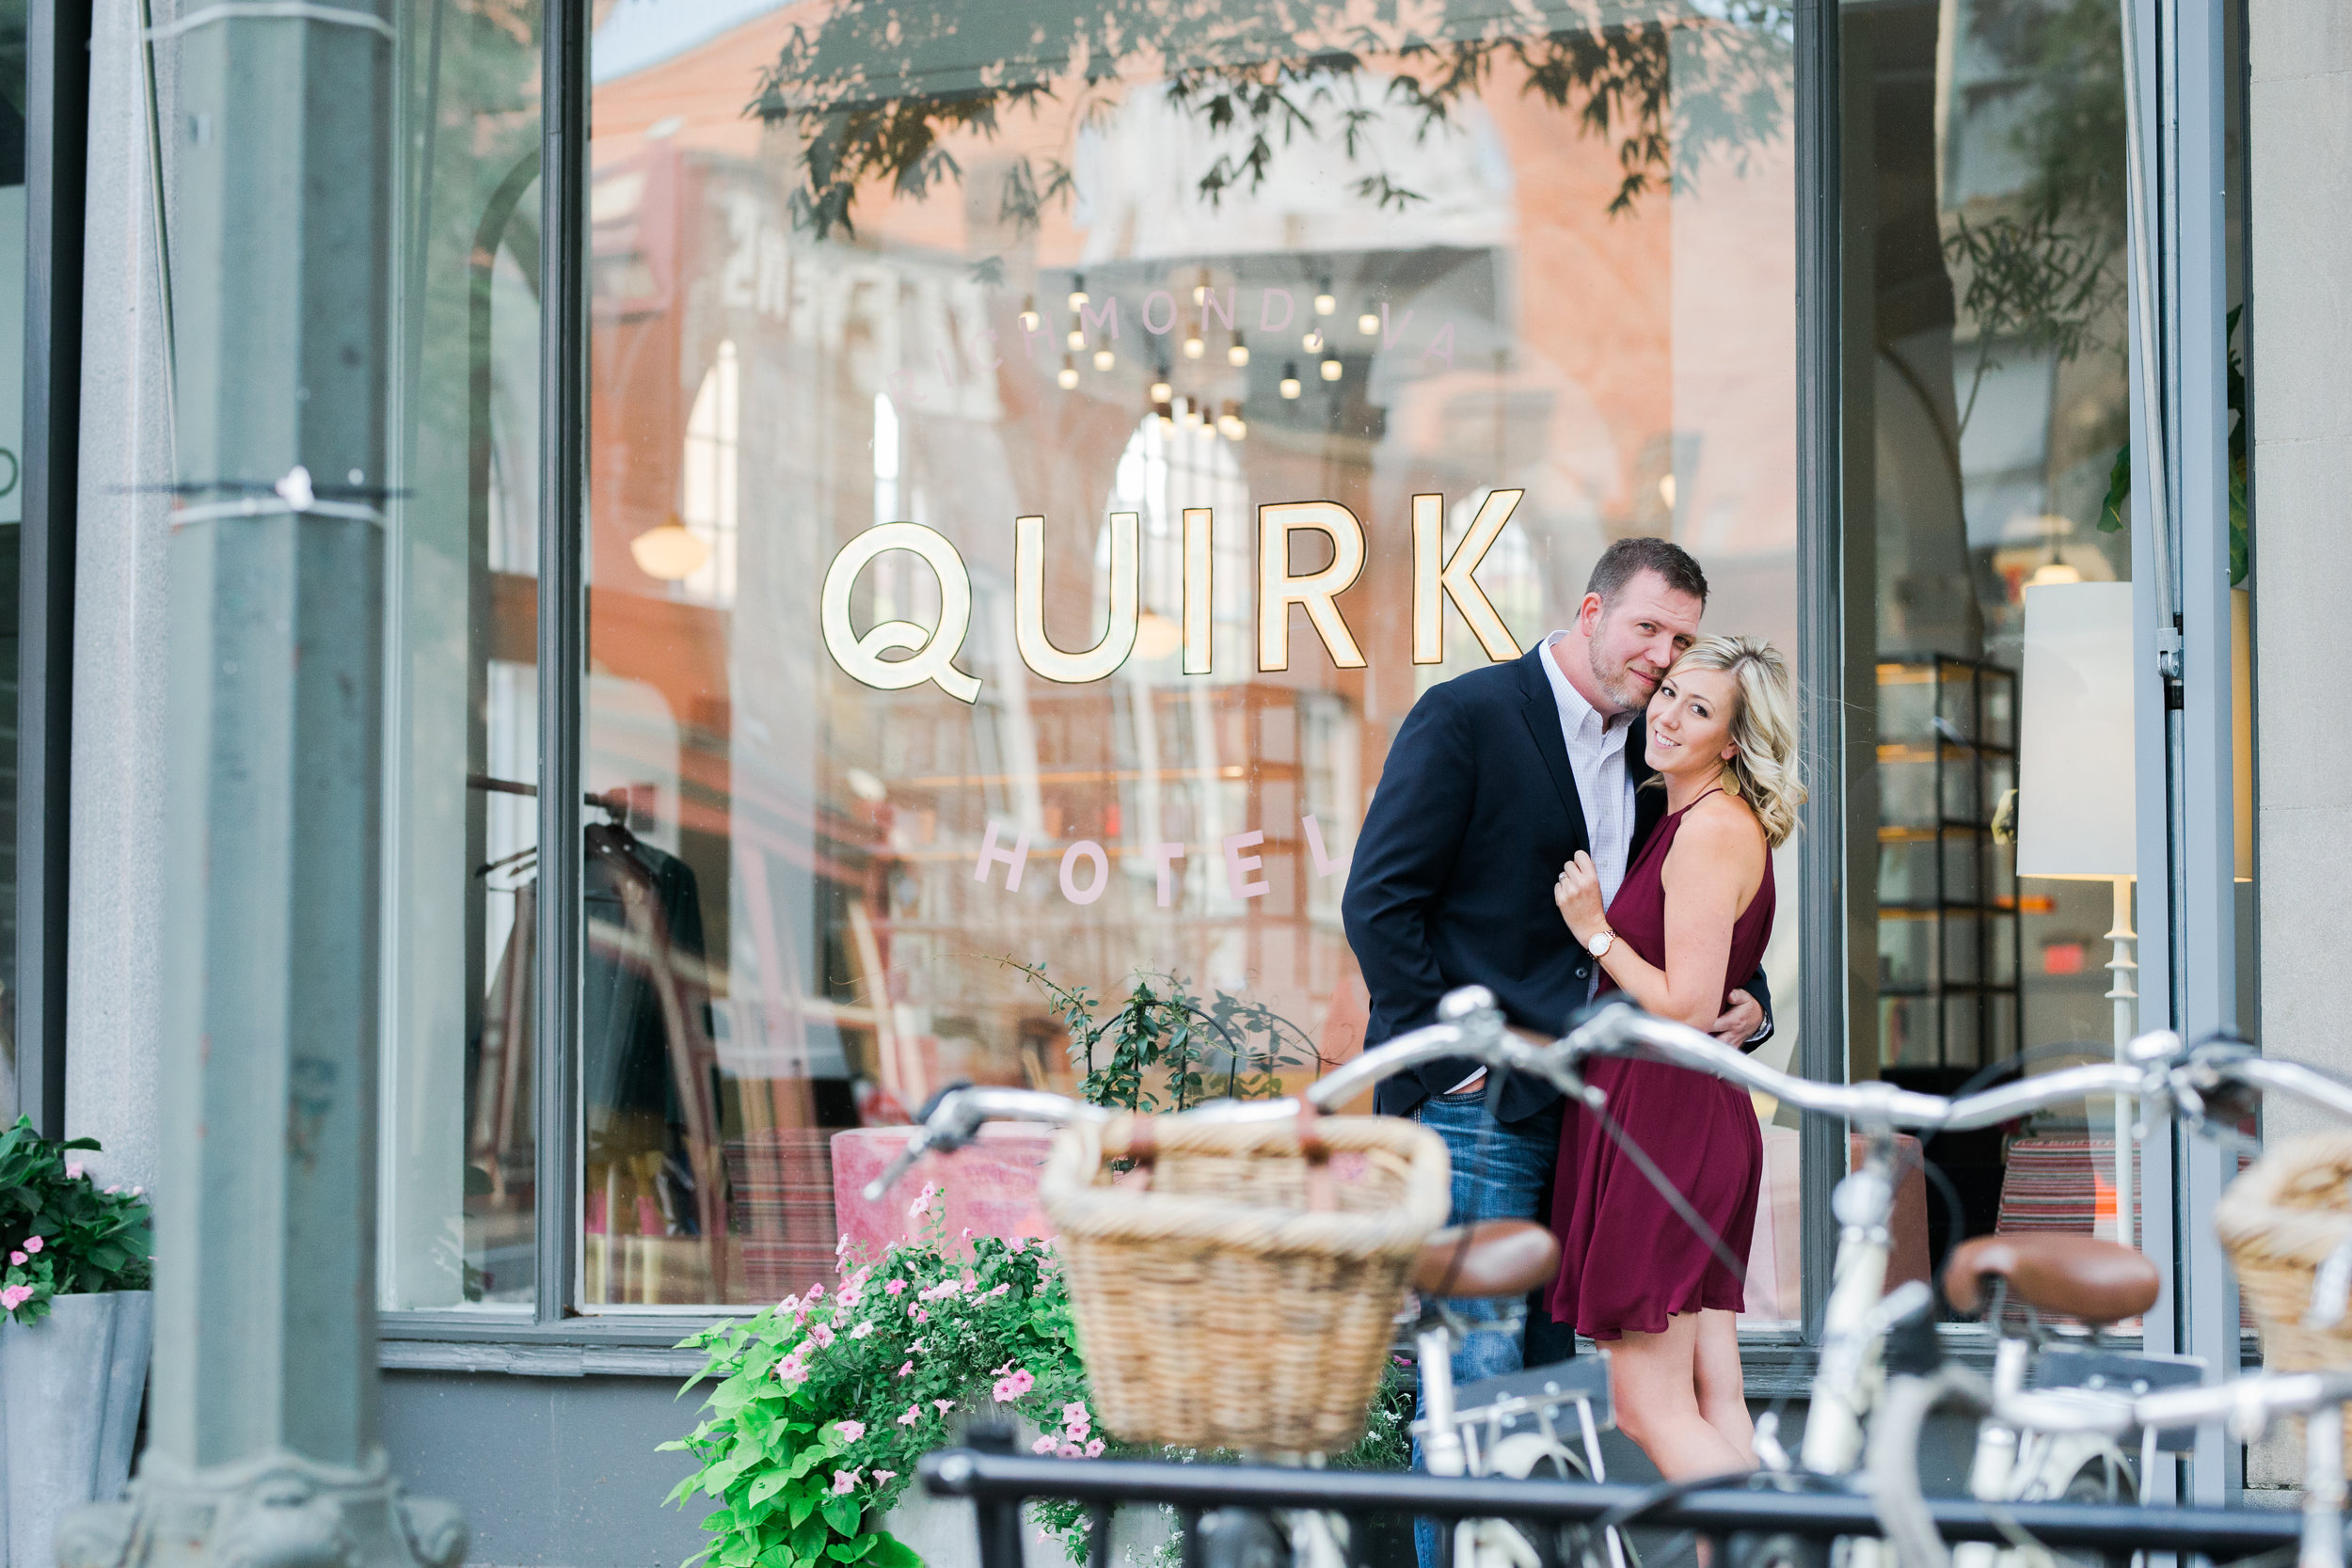 Quirk Hotel + Belle Island Engagement Photos - Luke and Ashley Photography - Richmond Virginia Wedding Photographer -- Wedding Blog - The Overwhelmed Bride